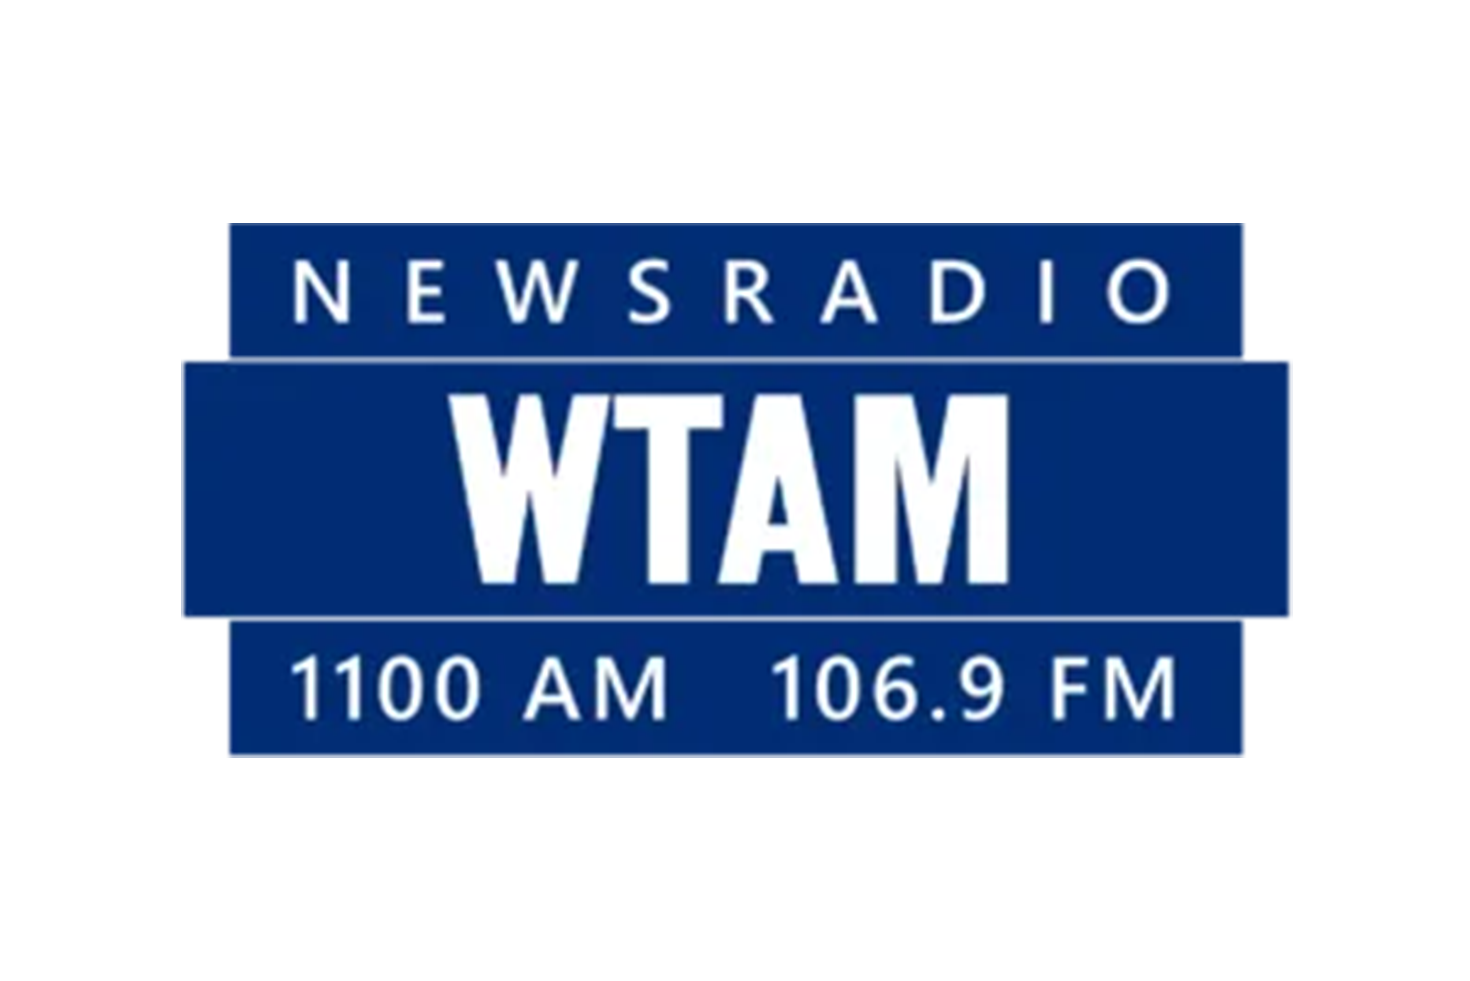 WTAM News radio 1100 AM 106.9 FM